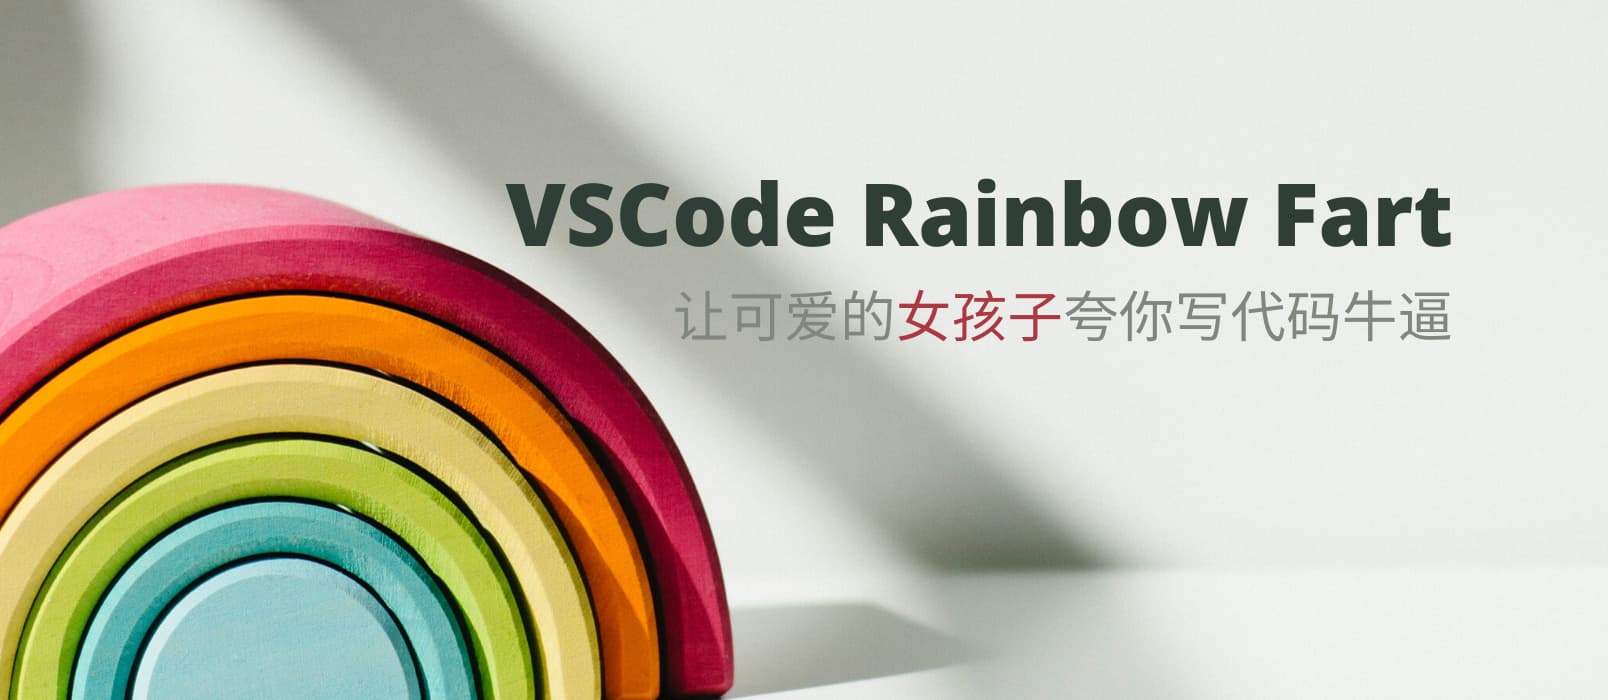 VSCode Rainbow Fart - 编程时，可爱的女孩子夸你写代码牛逼 1